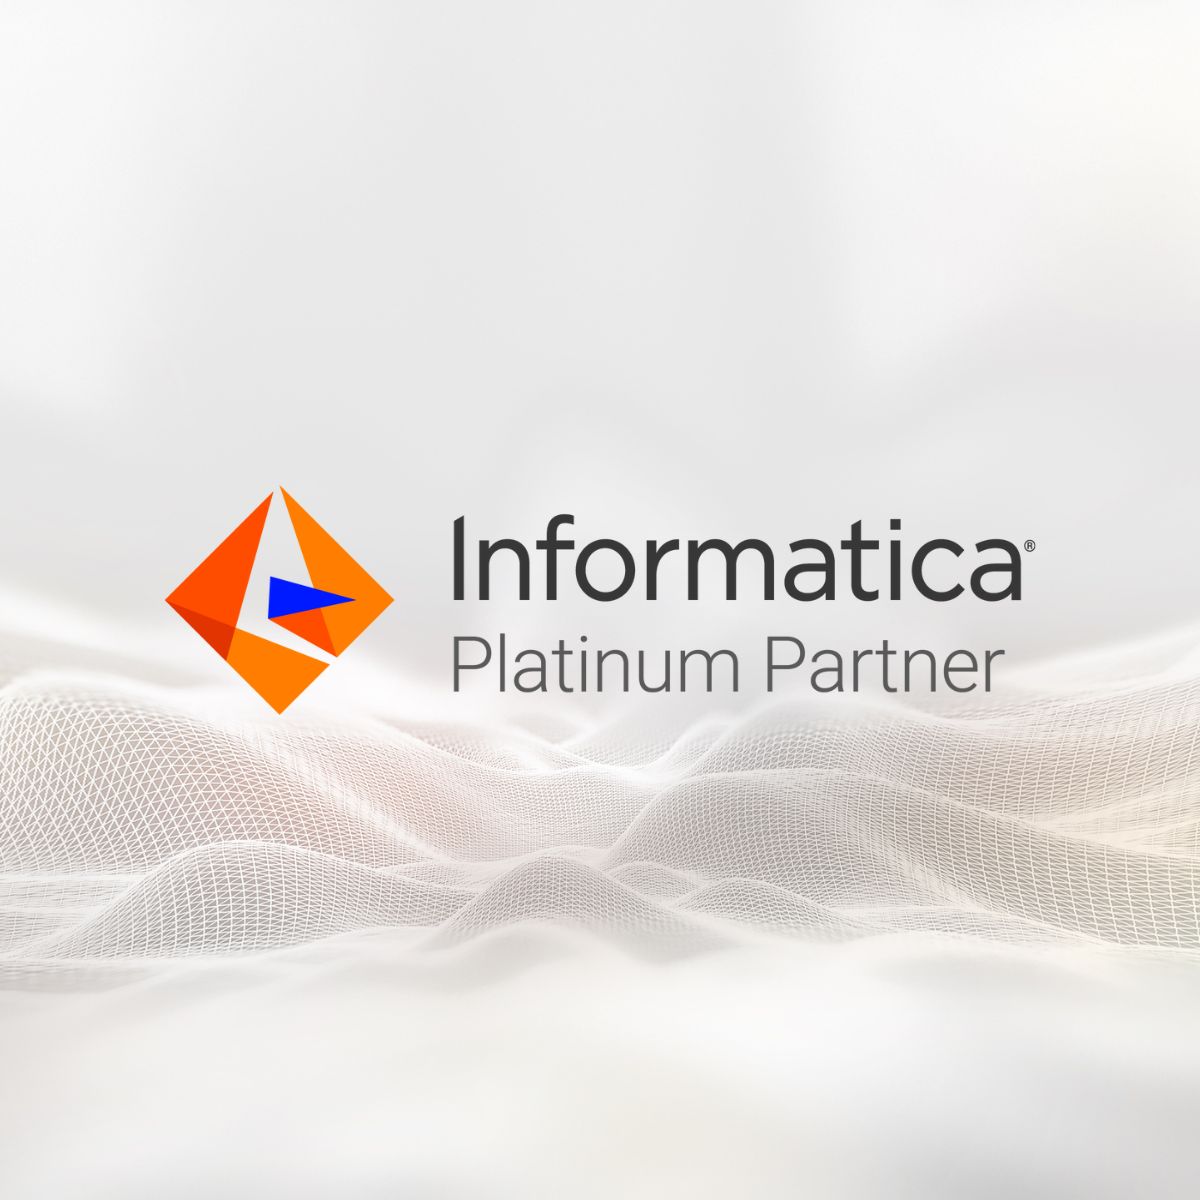 Informatica Platinum Partner - Dot Group